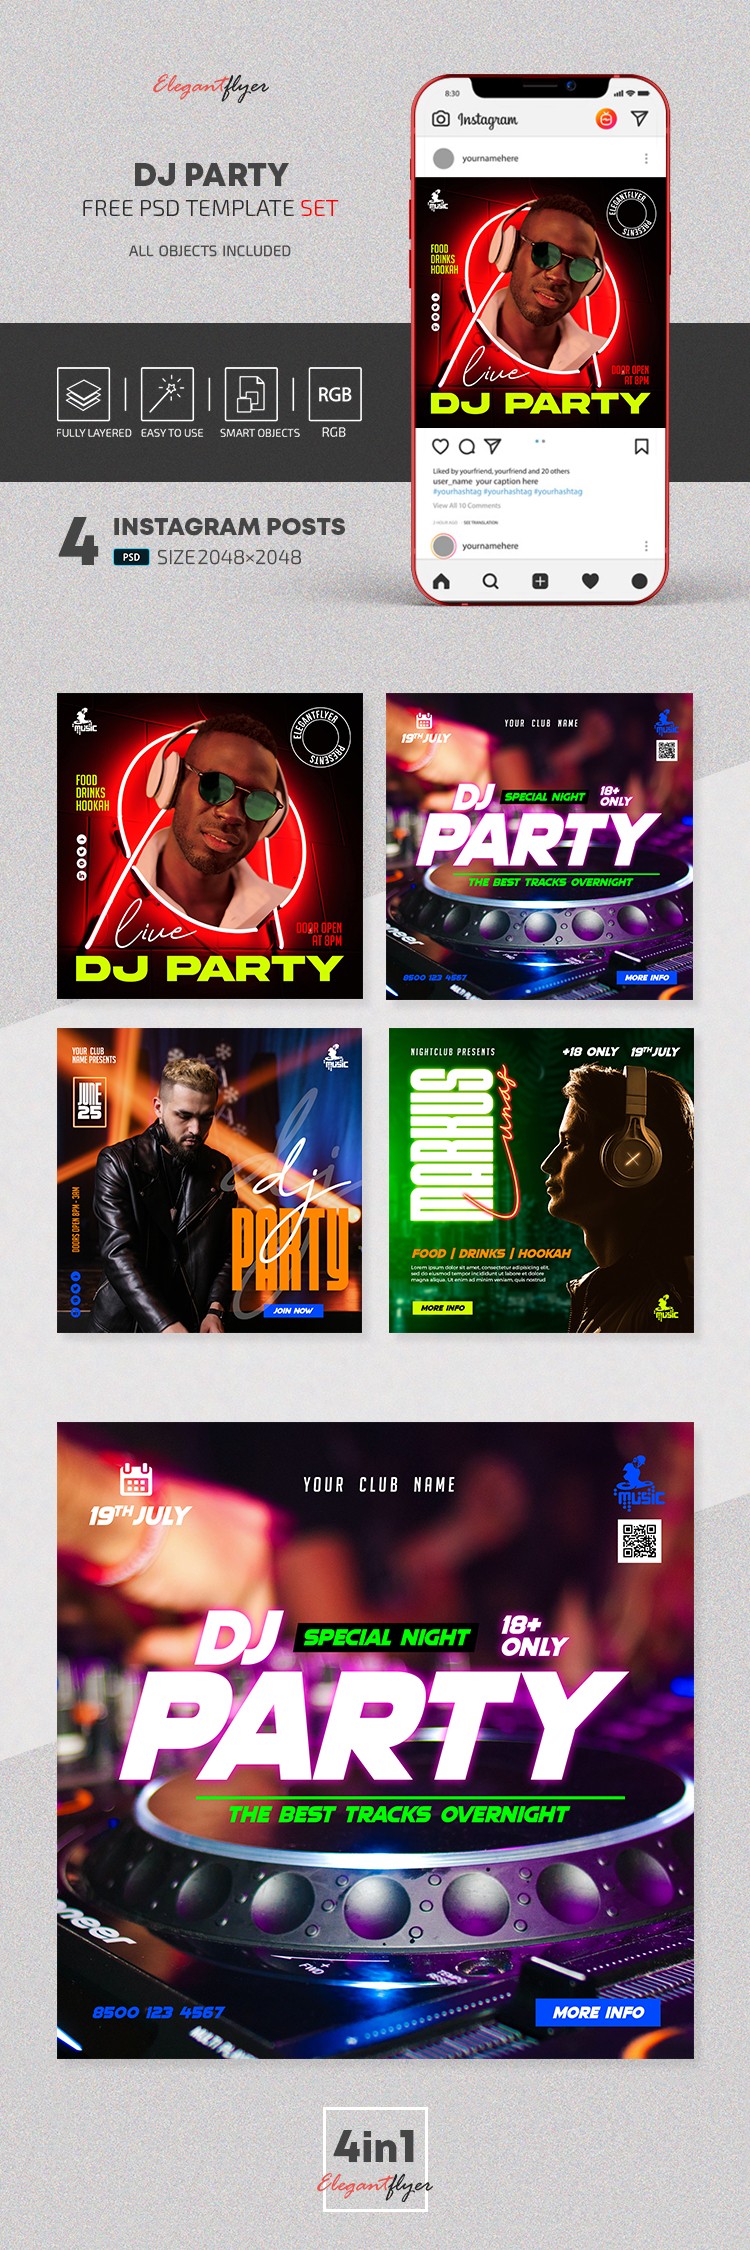 DJ Party - Free Instagram Post Templates Set in PSD by ElegantFlyer